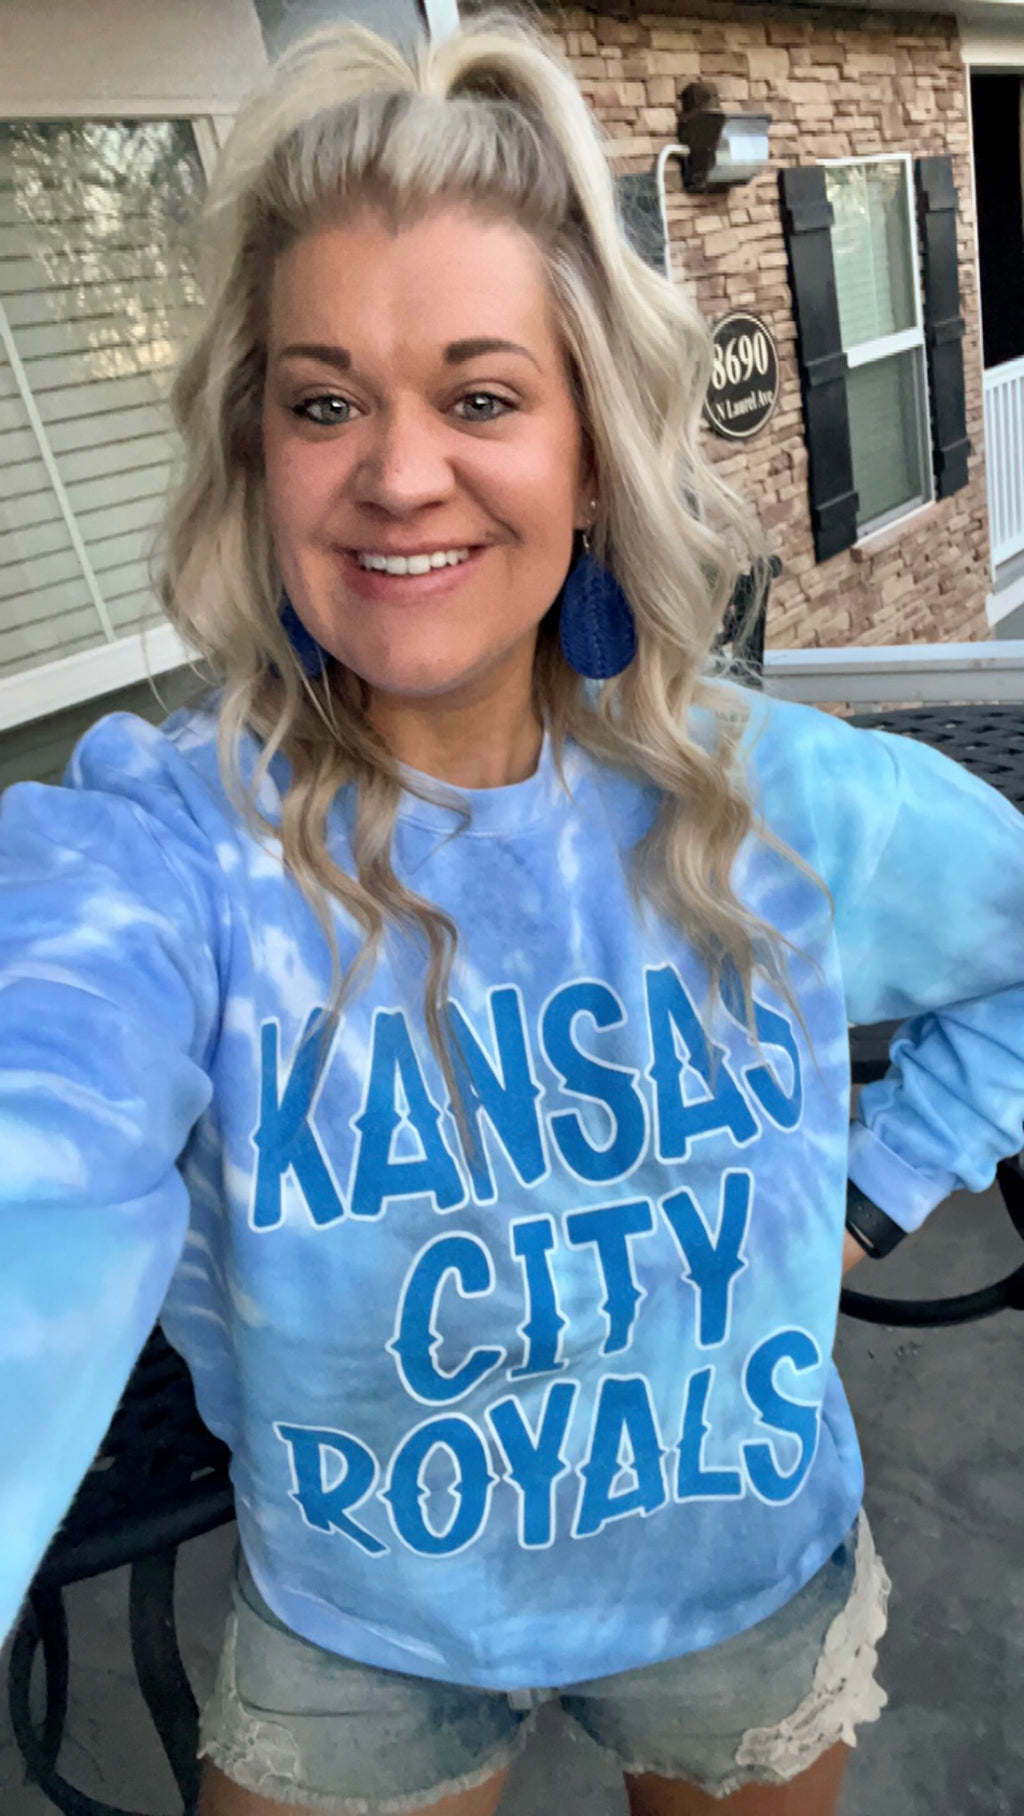 Kansas City Royals - Unisex Tie-Dye Sweatshirt